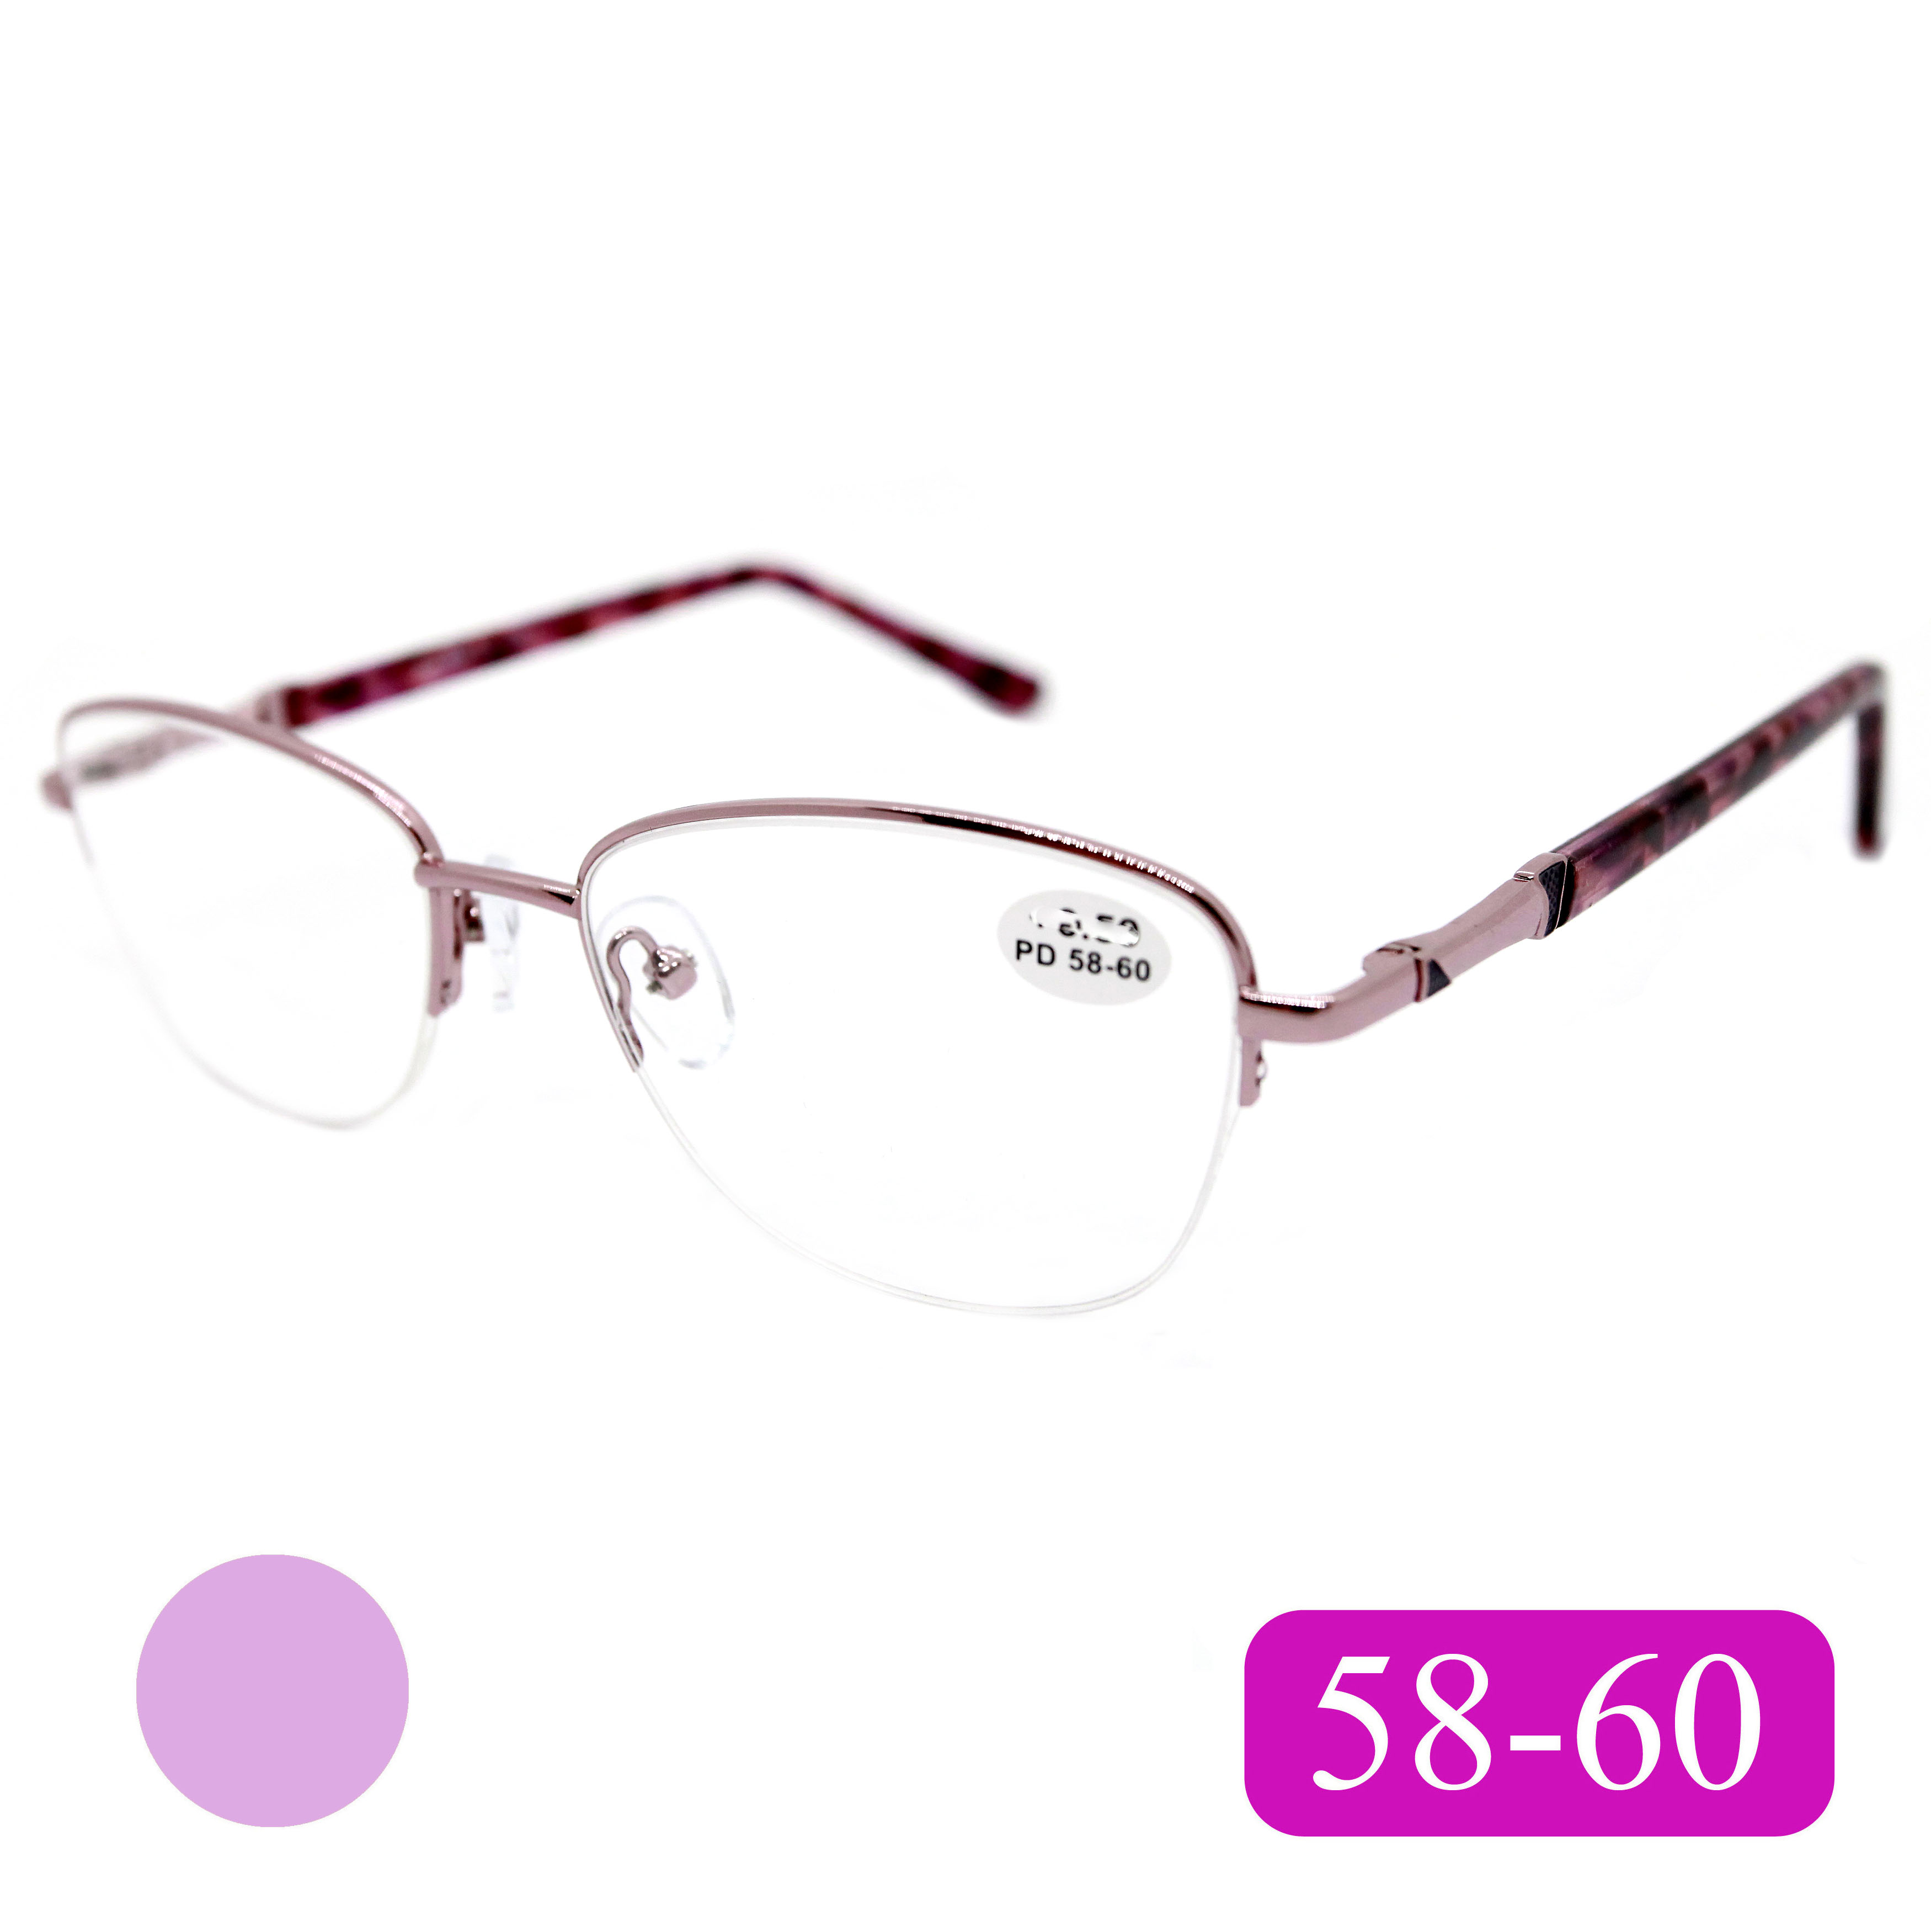 Готовые очки Fabia Monti 8920 +1.50, без футляра, цвет фиолетовый, РЦ 58-60